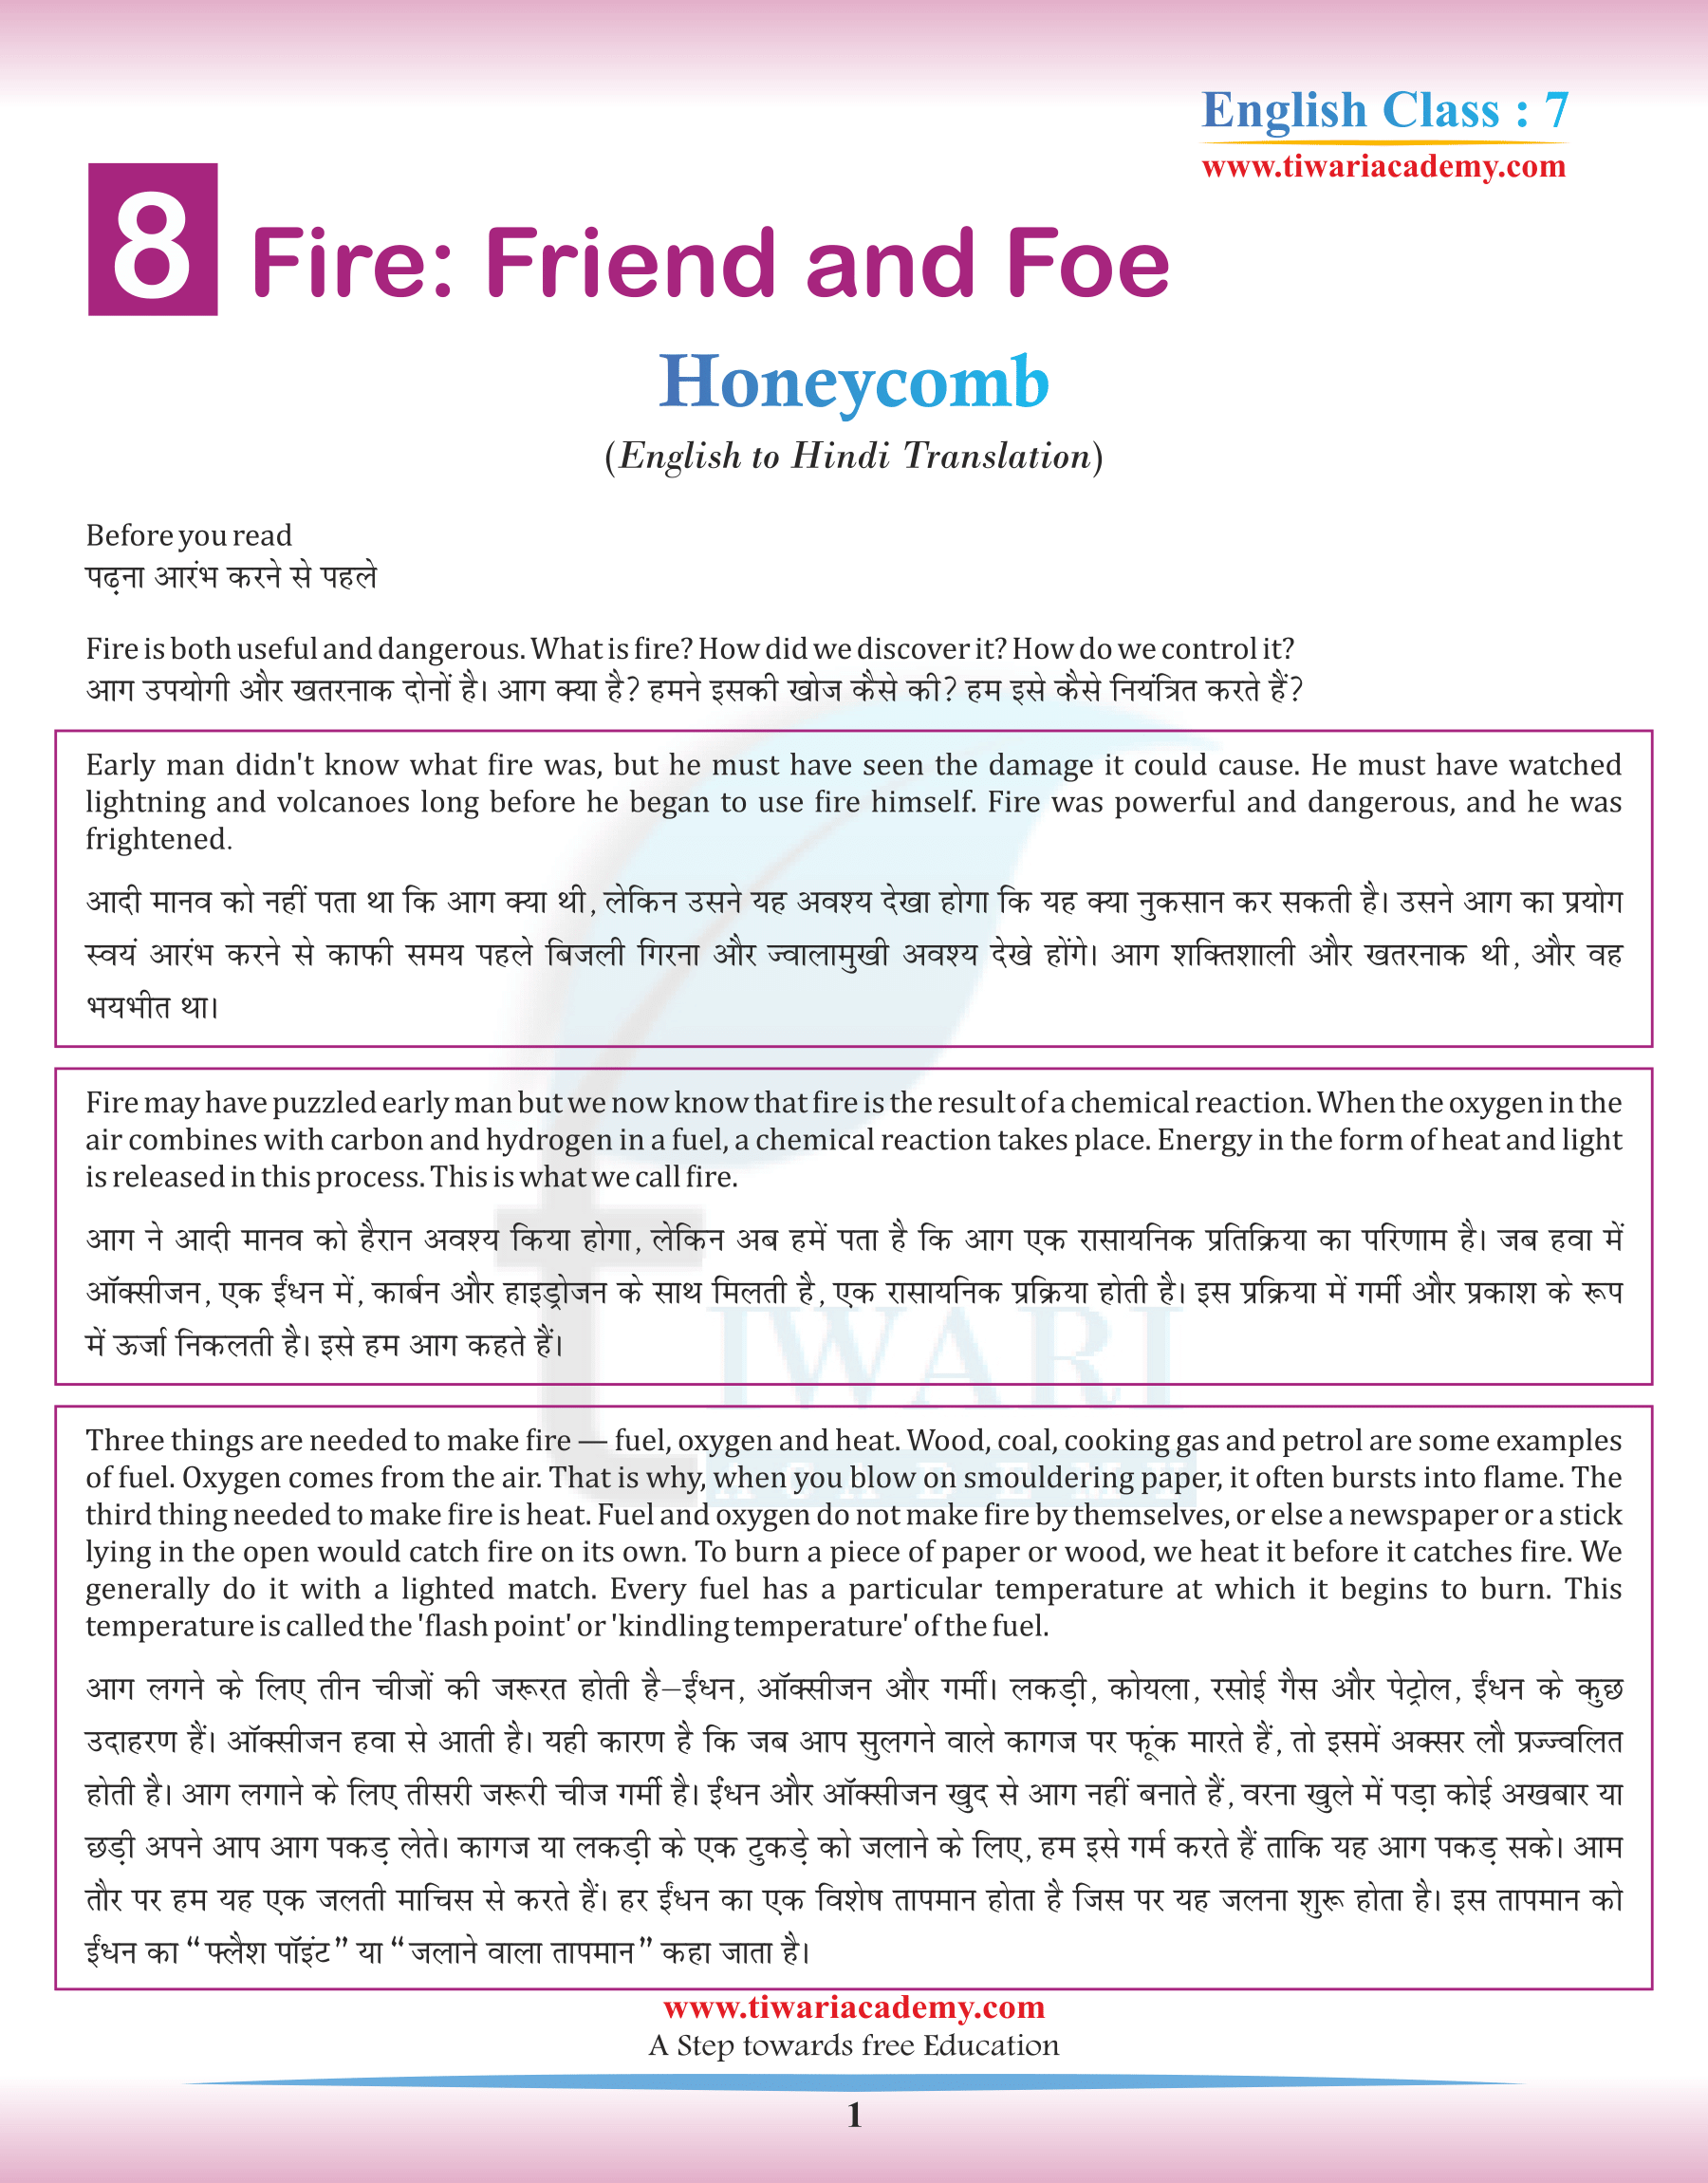 Class 7 English Honeycomb Chapter 8 Fire Friend and Foe in Hindi Medium